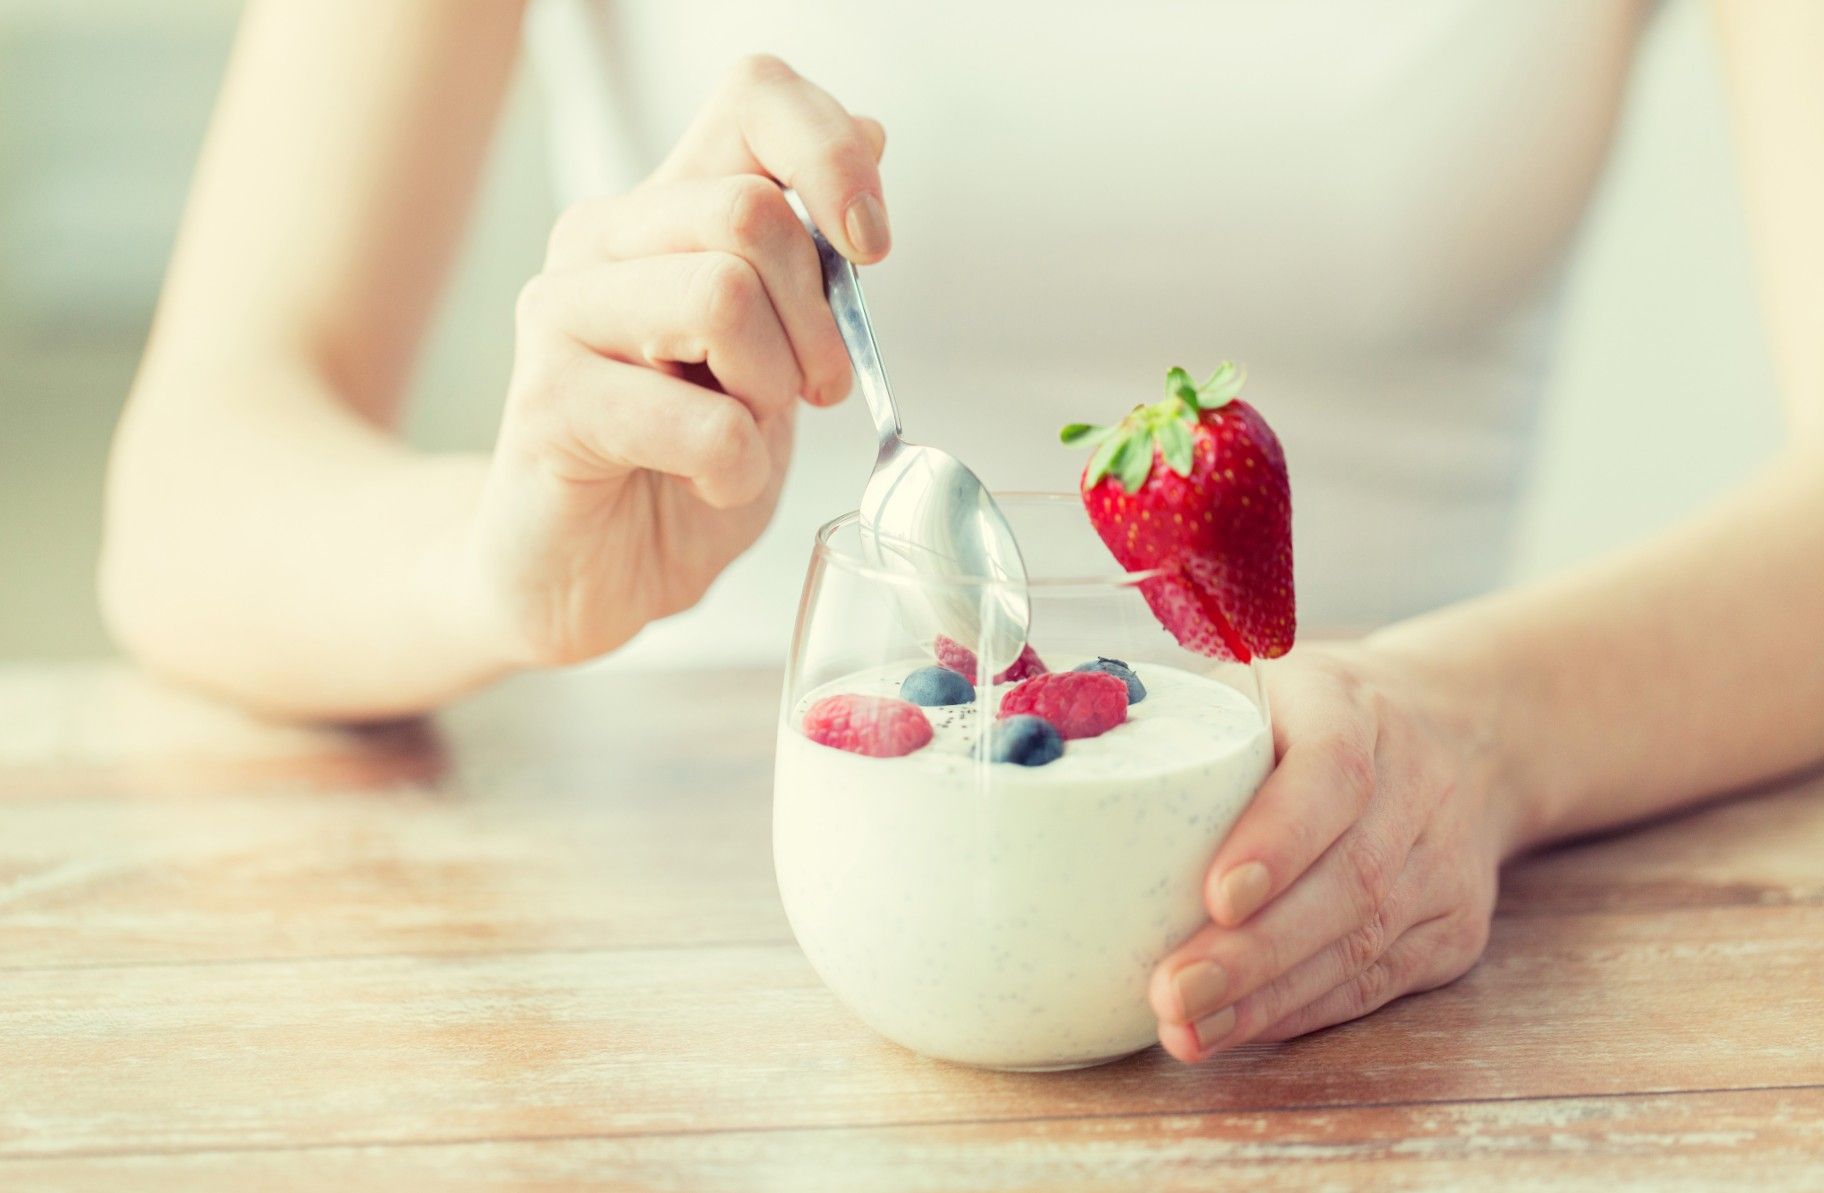 A woman's hands hold a glass of yogurt and fruit as she digs in a spoon - chobani greek yogurt